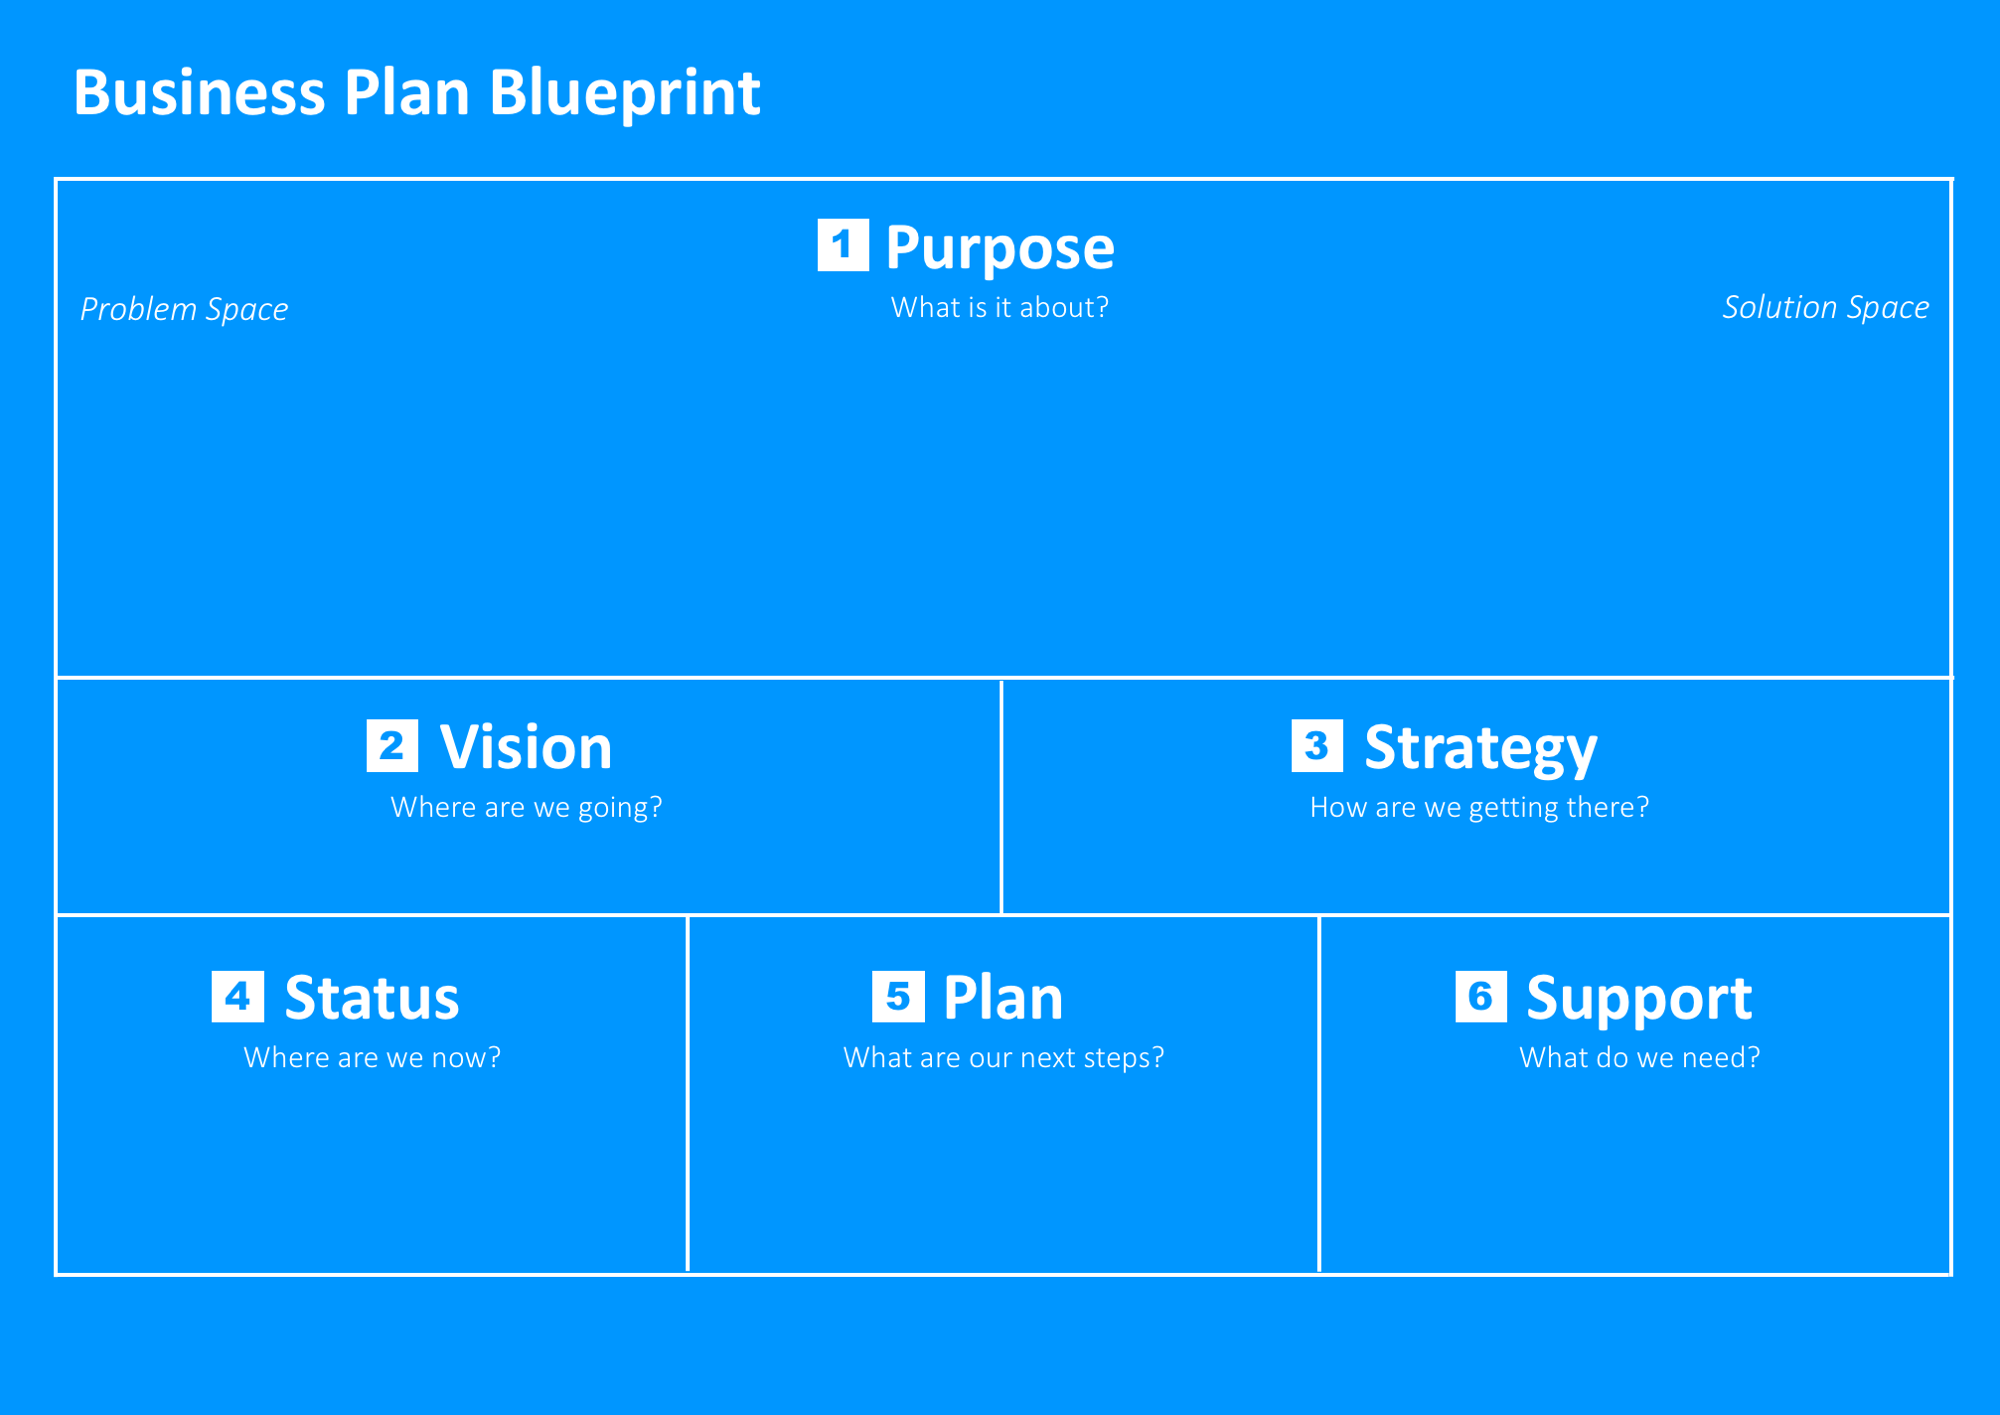 What is your Business Plan Blueprint  Geert Claes  Medium